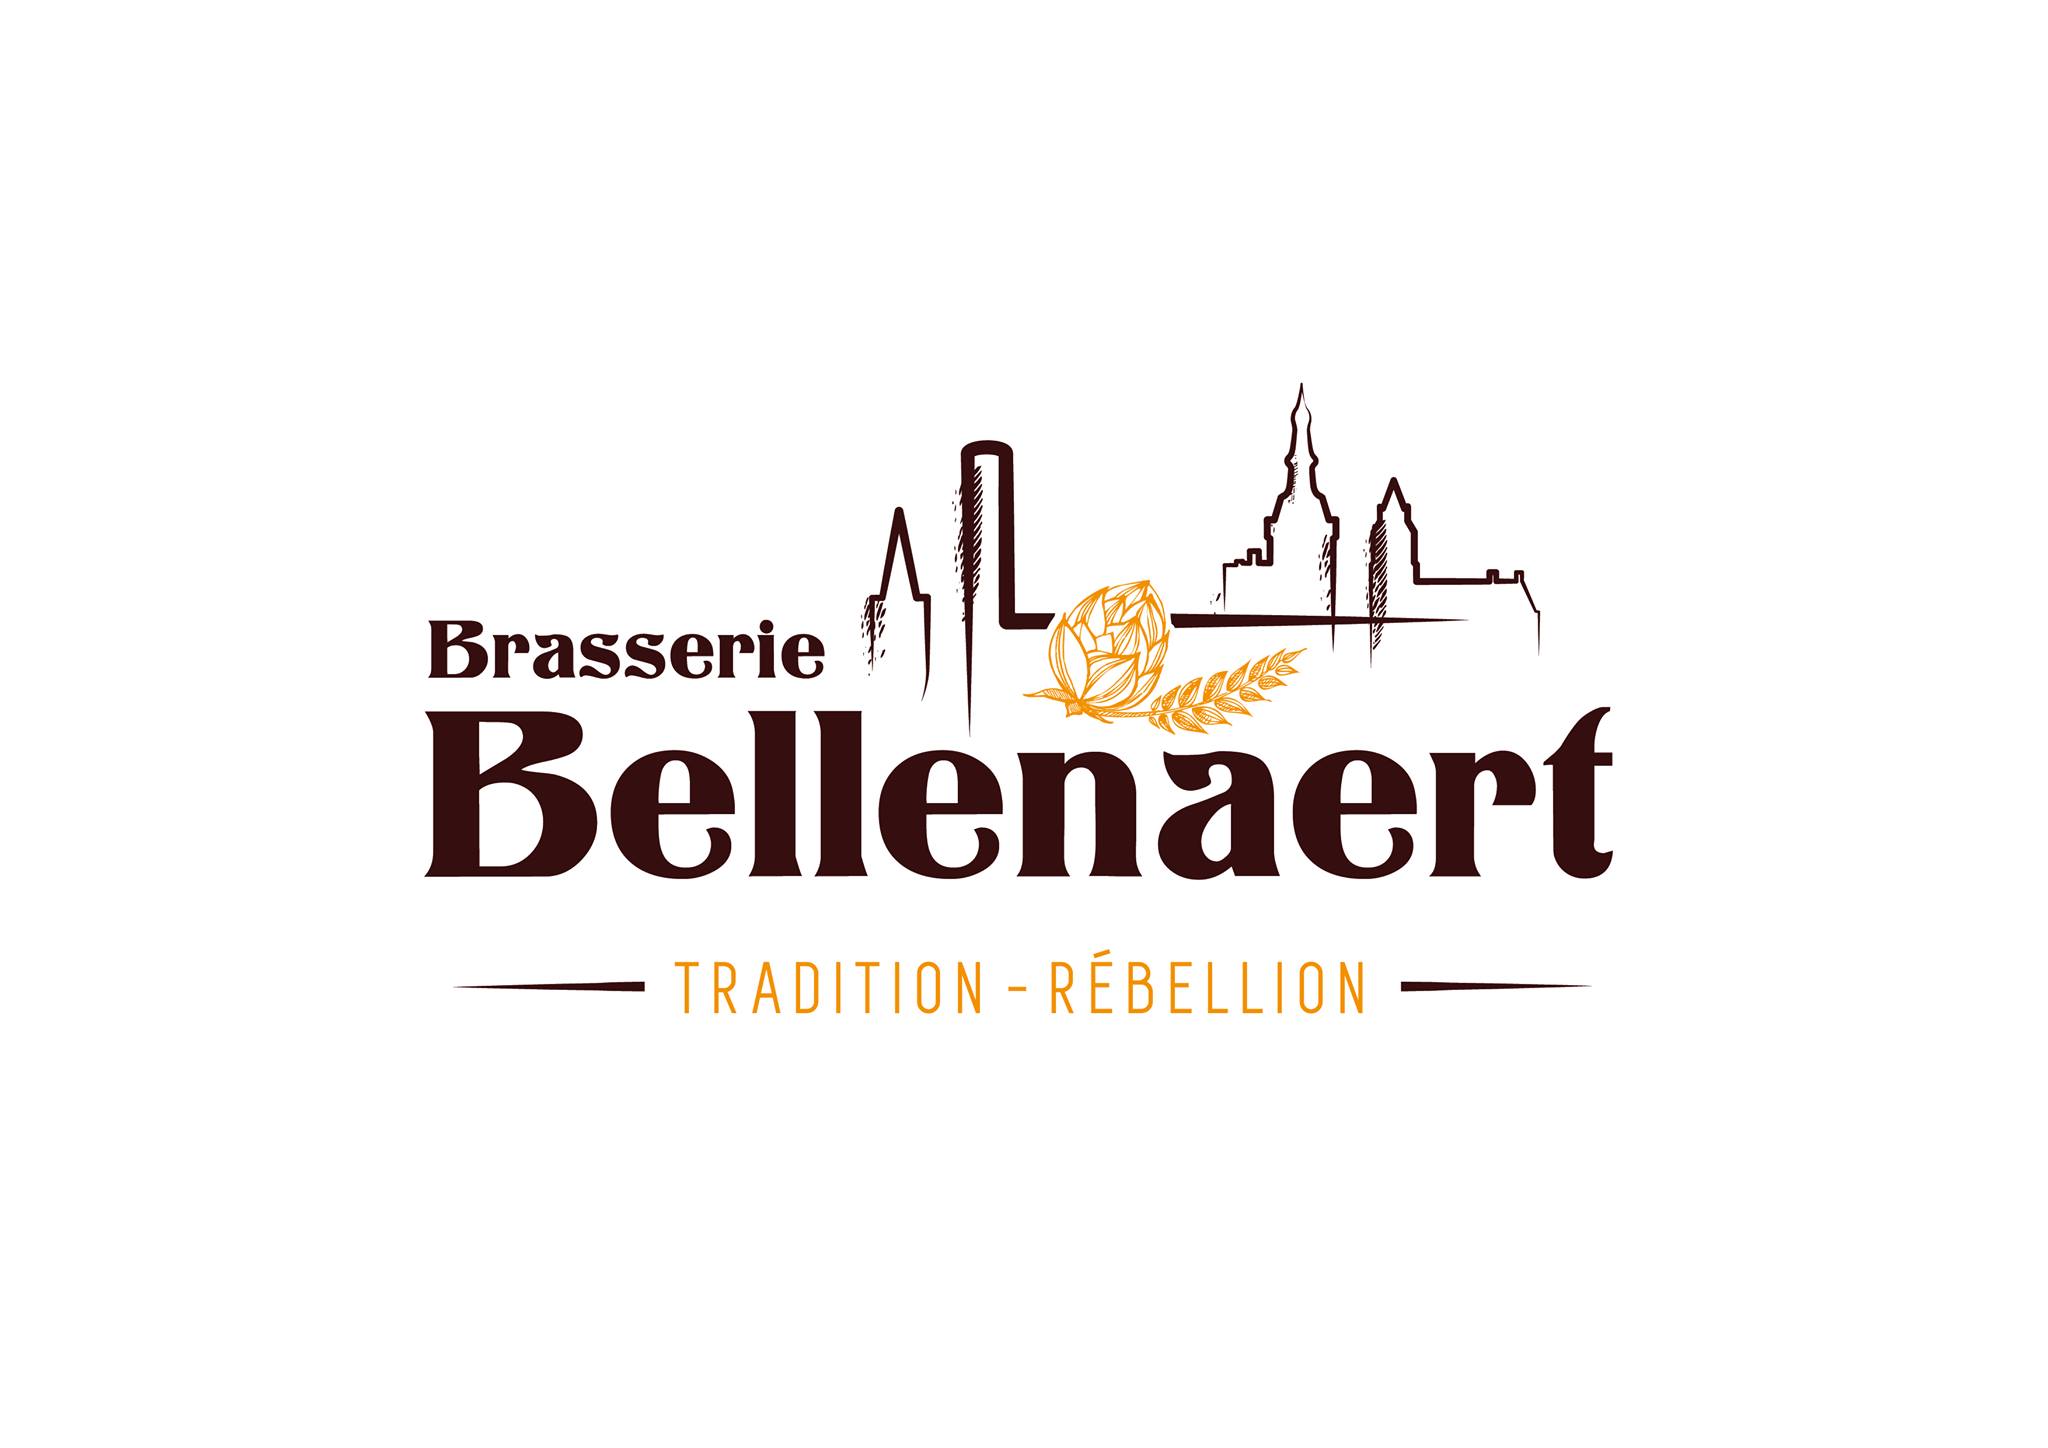 Brasserie Bellenaert